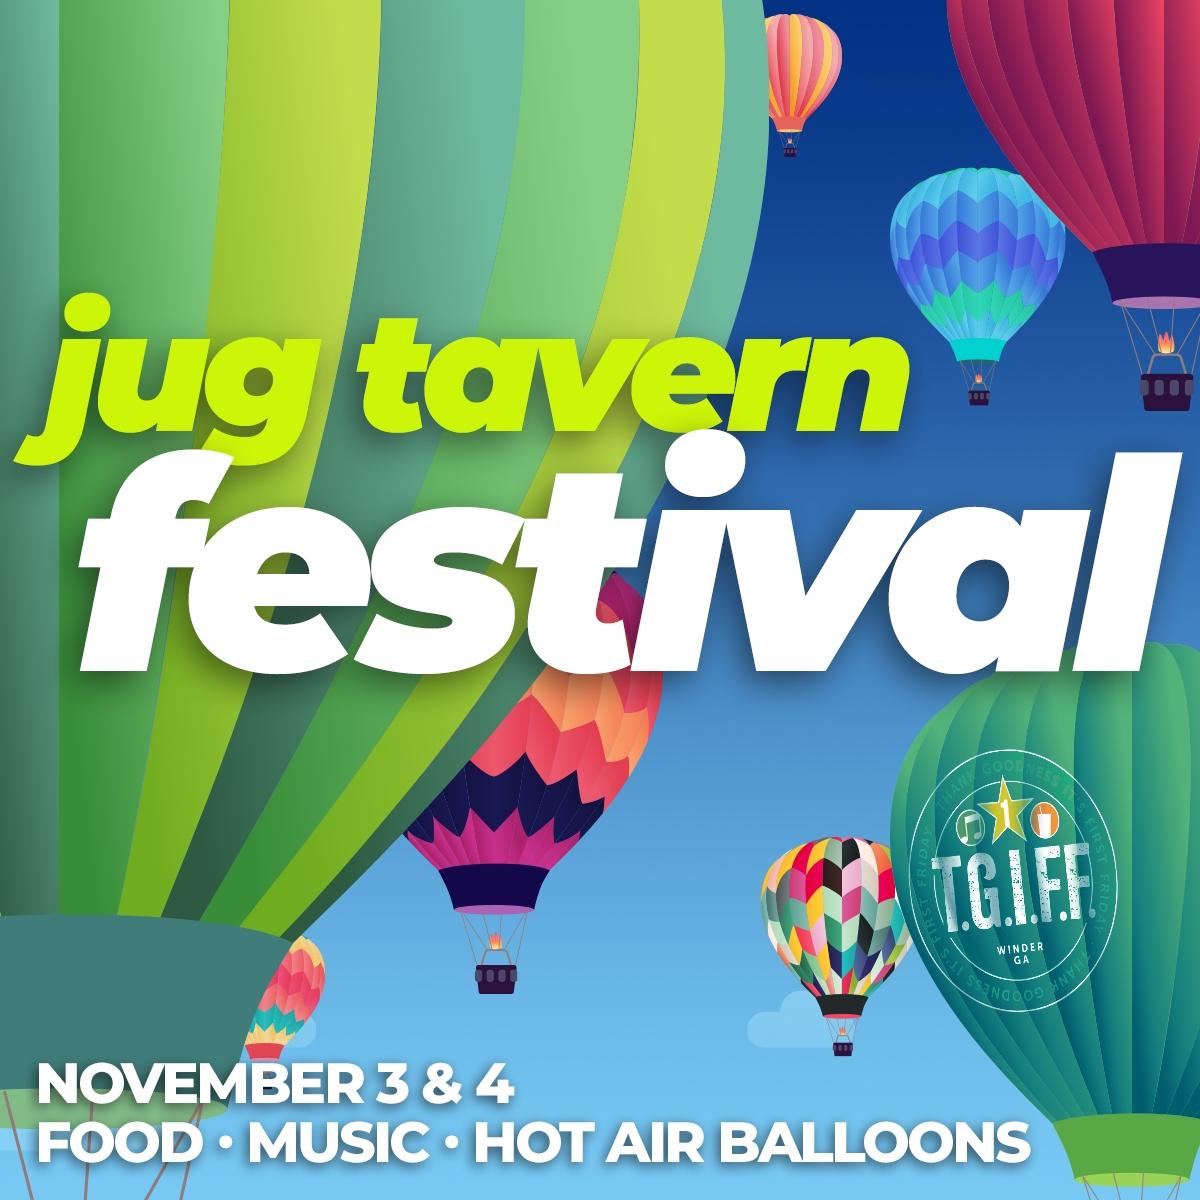 TGIFF Presents Jug Tavern Festival Eventeny